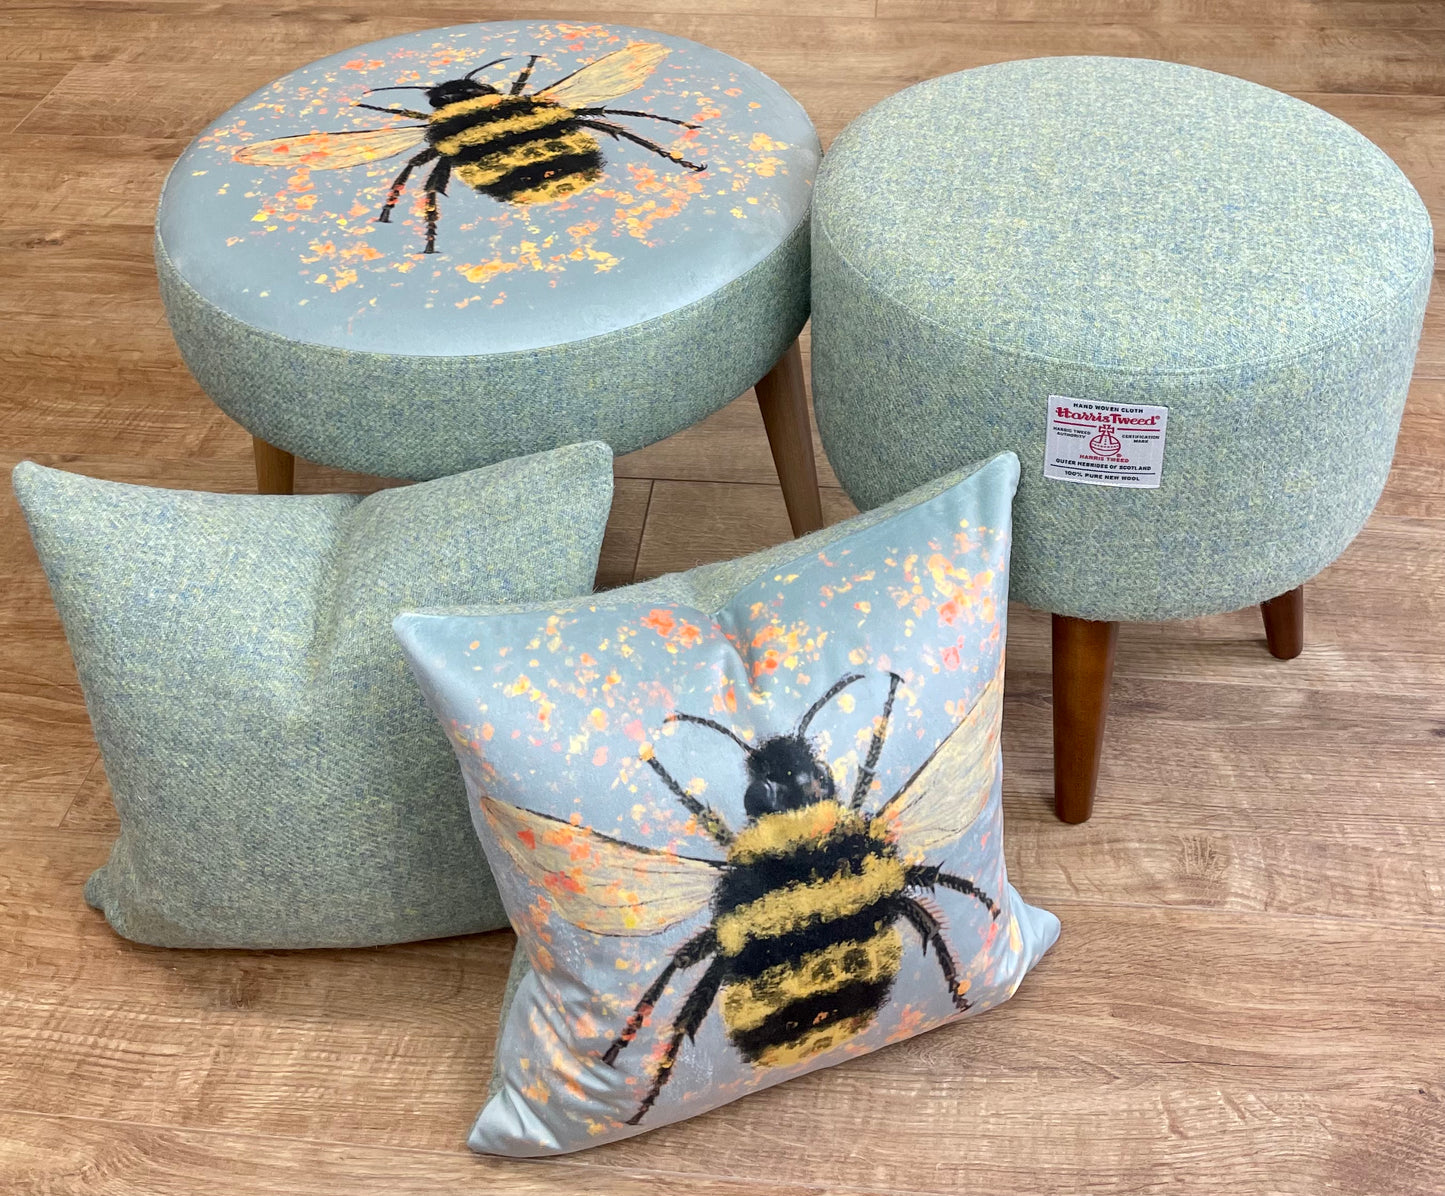 Bee with Pollen on Duck Egg Velvet Cushion with Harris Tweed